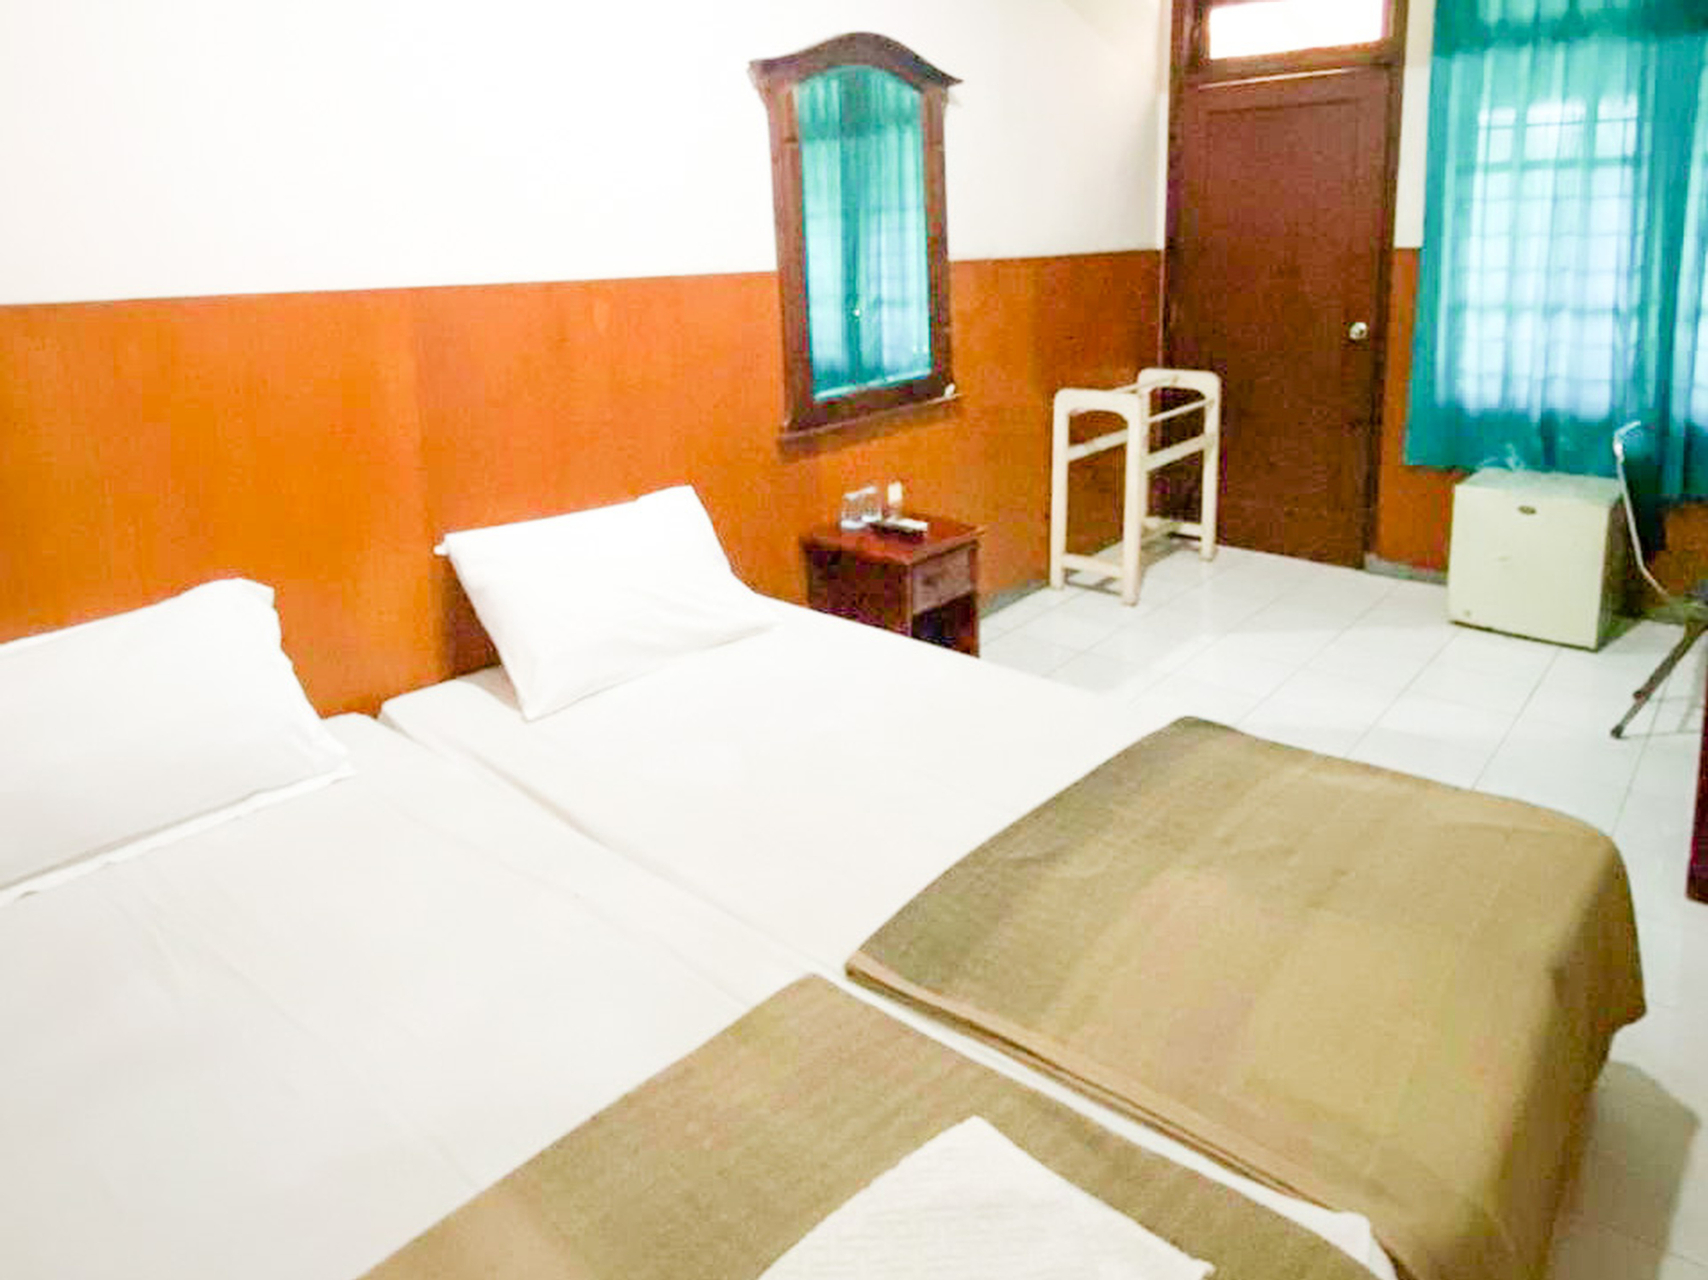 Bedroom 4, Hotel Shabine Rungkut RedPartner, Surabaya